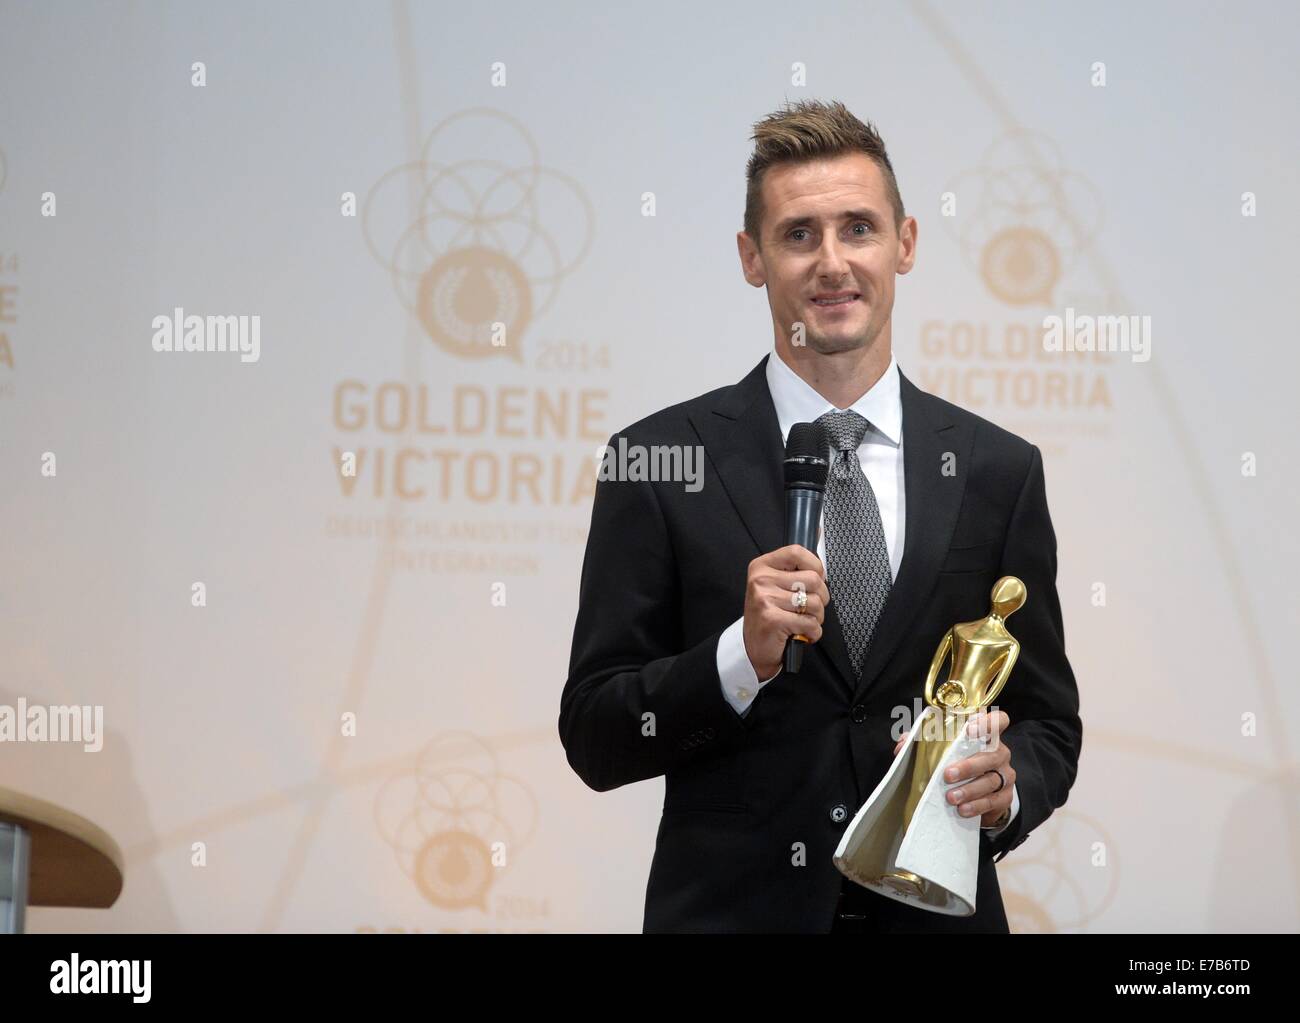 Berlin, Germany. 11th Sep, 2014. Soccer world champion Miroslav Klose accepts the 'Goldene Victoria' award from the Deutschlandstiftung Integration in Berlin, Germany, 11 September 2014. Photo: BRITTA PEDERSEN/dpa/Alamy Live News Stock Photo